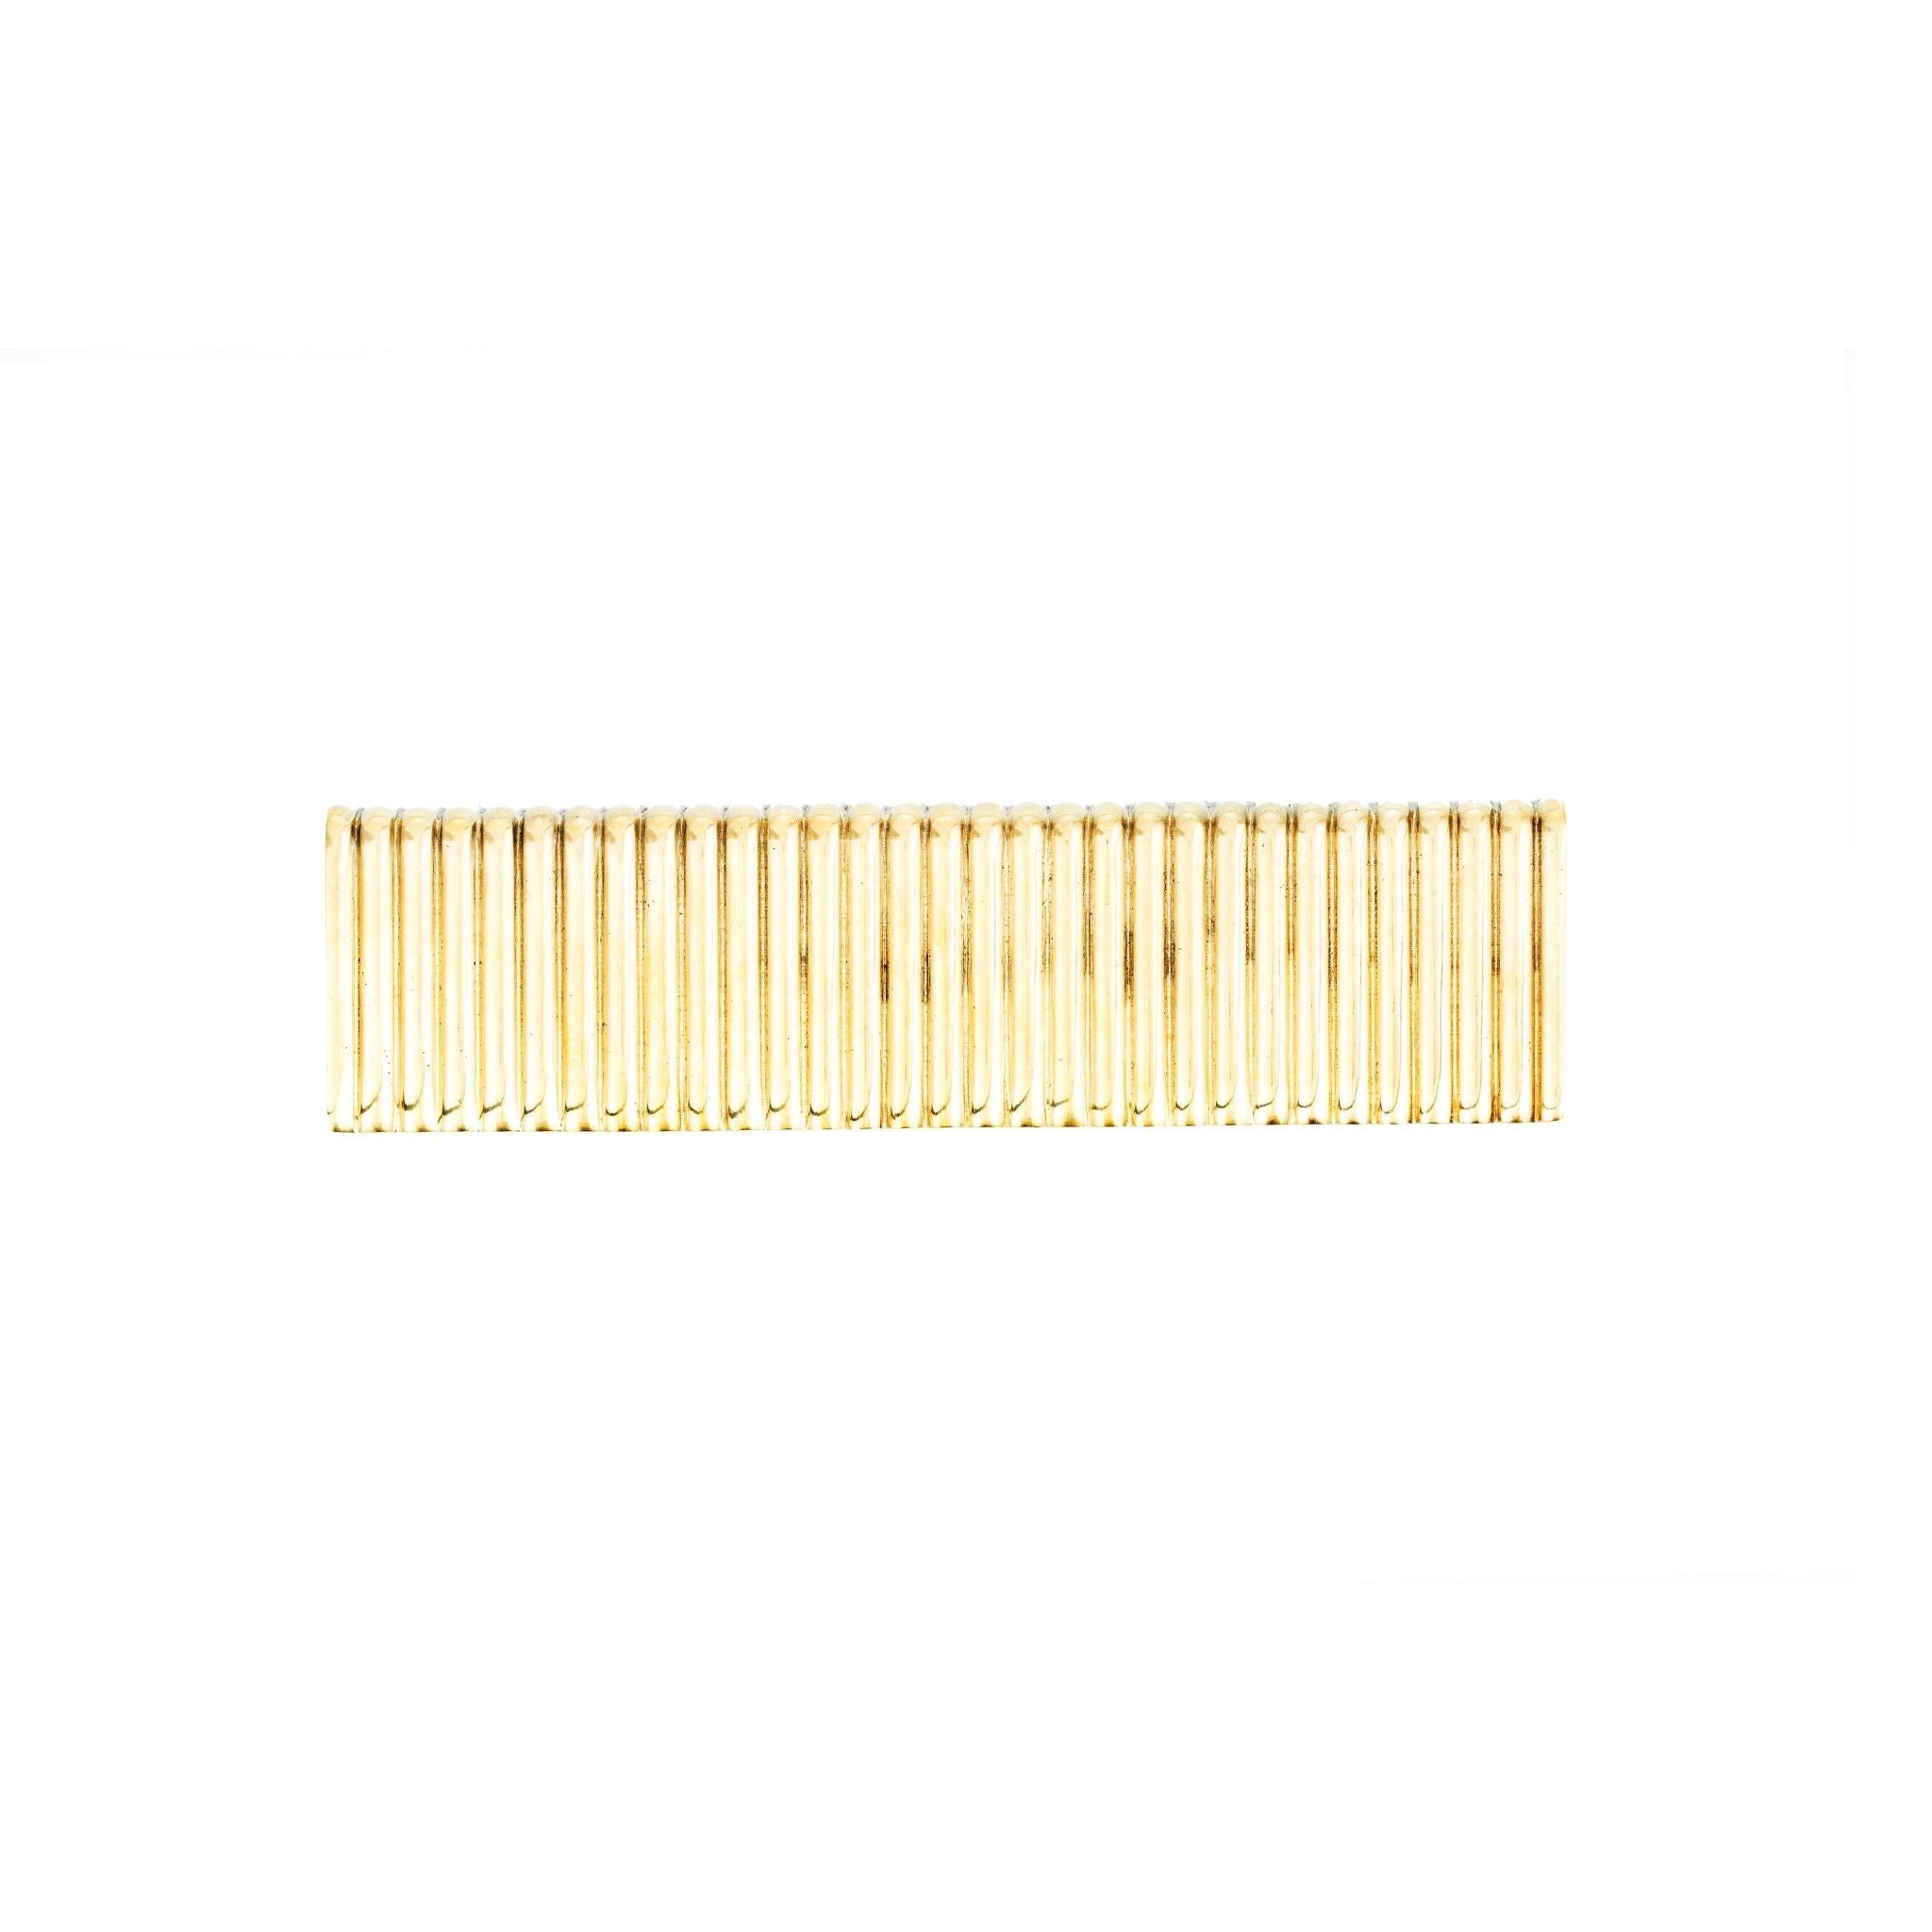 Novecento brass striped rectangular with big handle - ilbronzetto